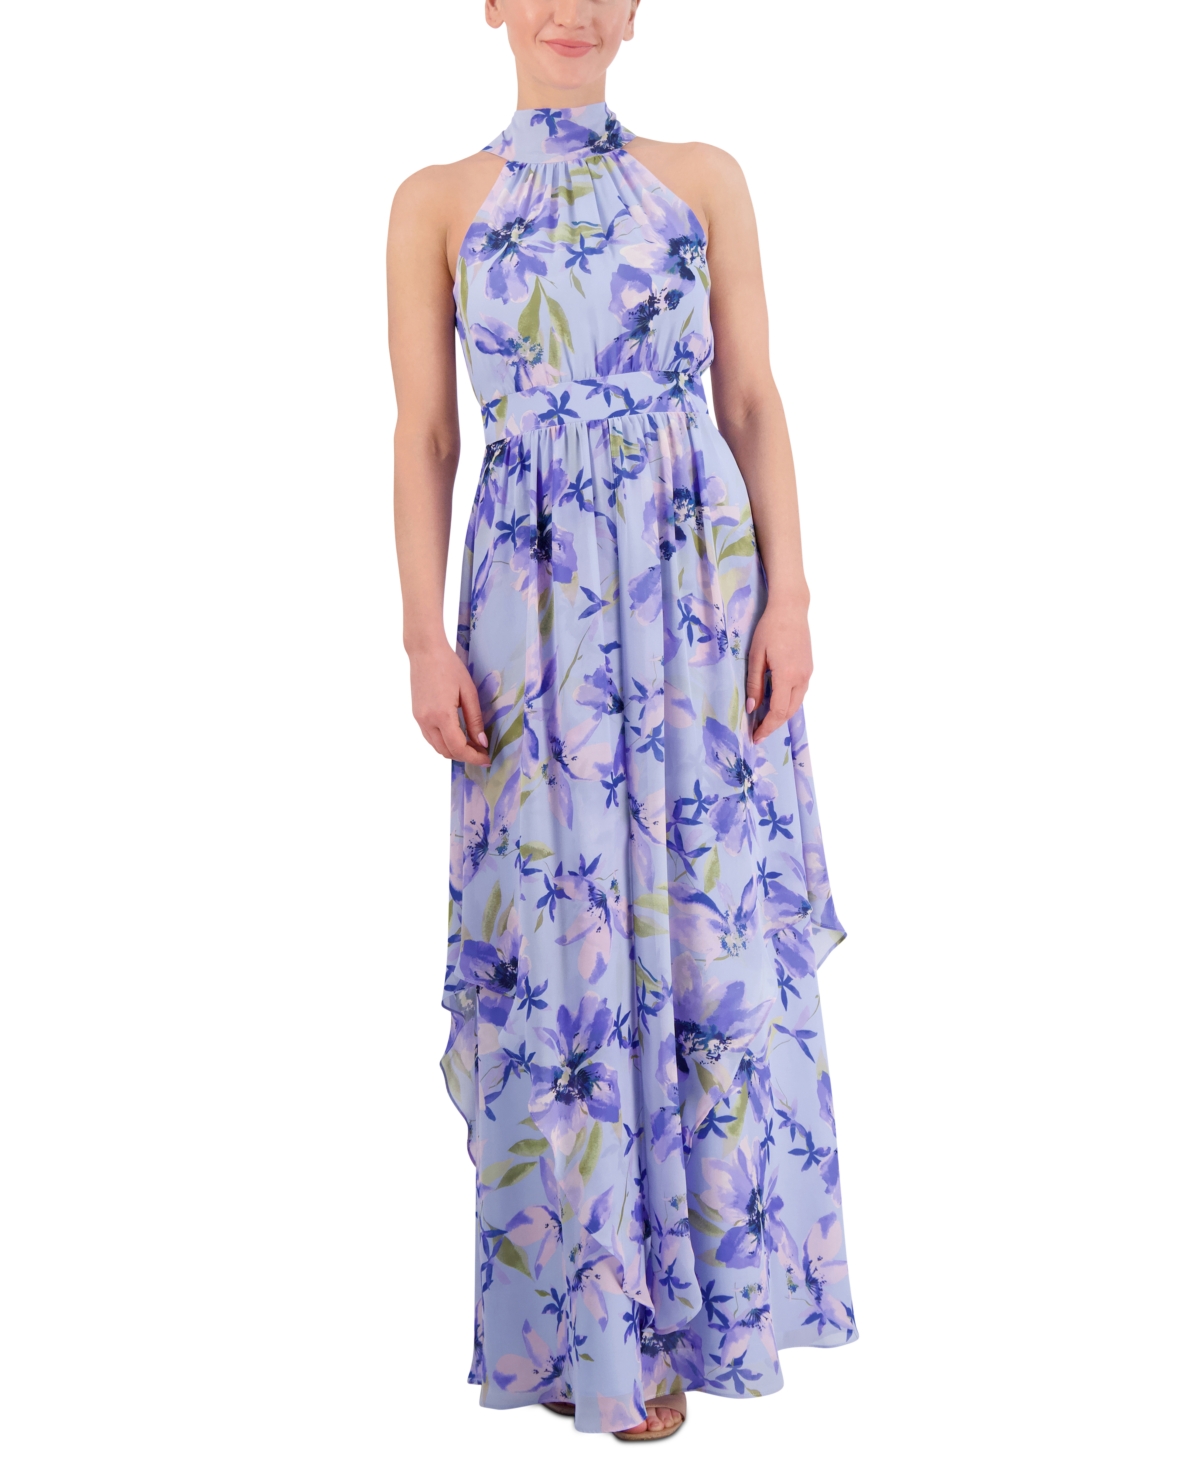 Women's Printed High-Neck Sleeveless Chiffon Dress - Periwinkle